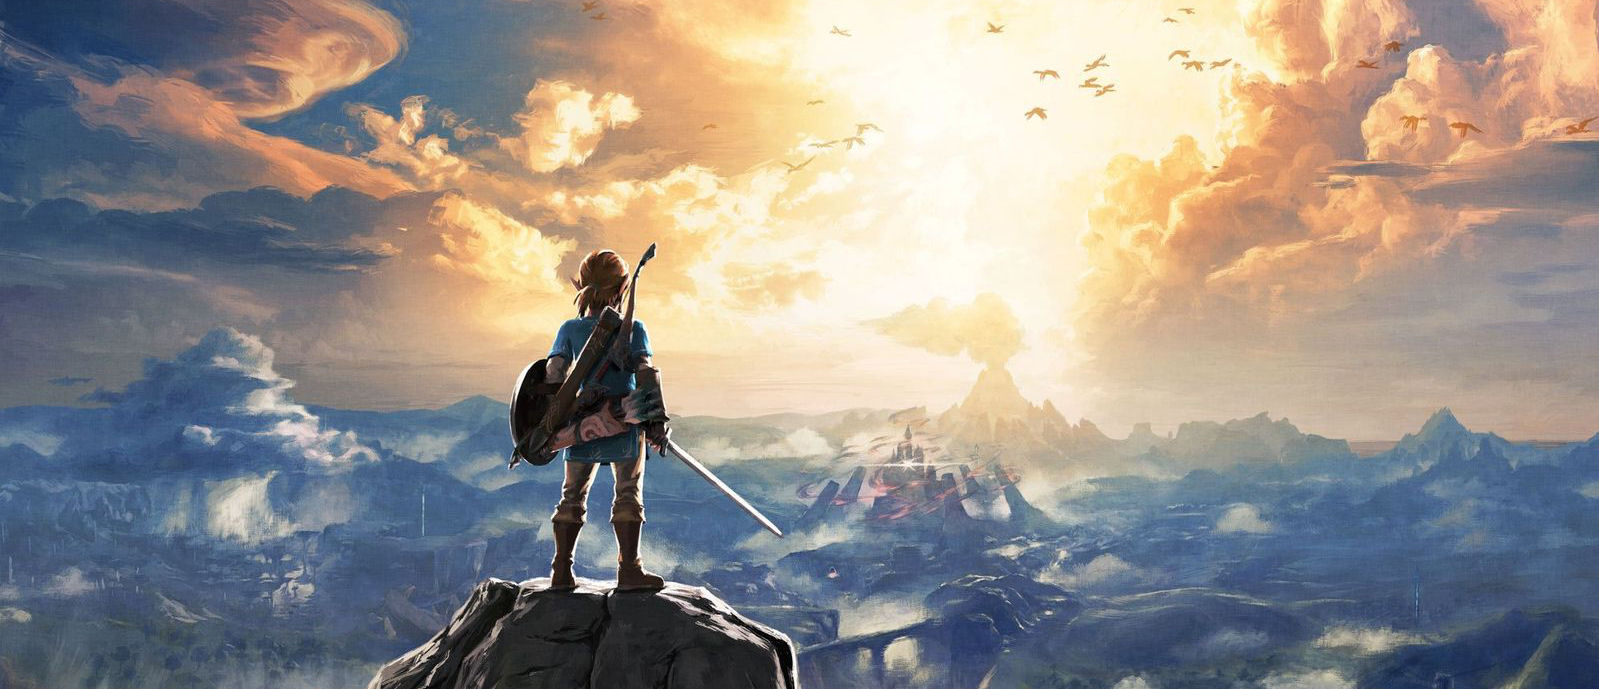 Breath of the Wild Walkthrough - The Legend of Zelda Guide